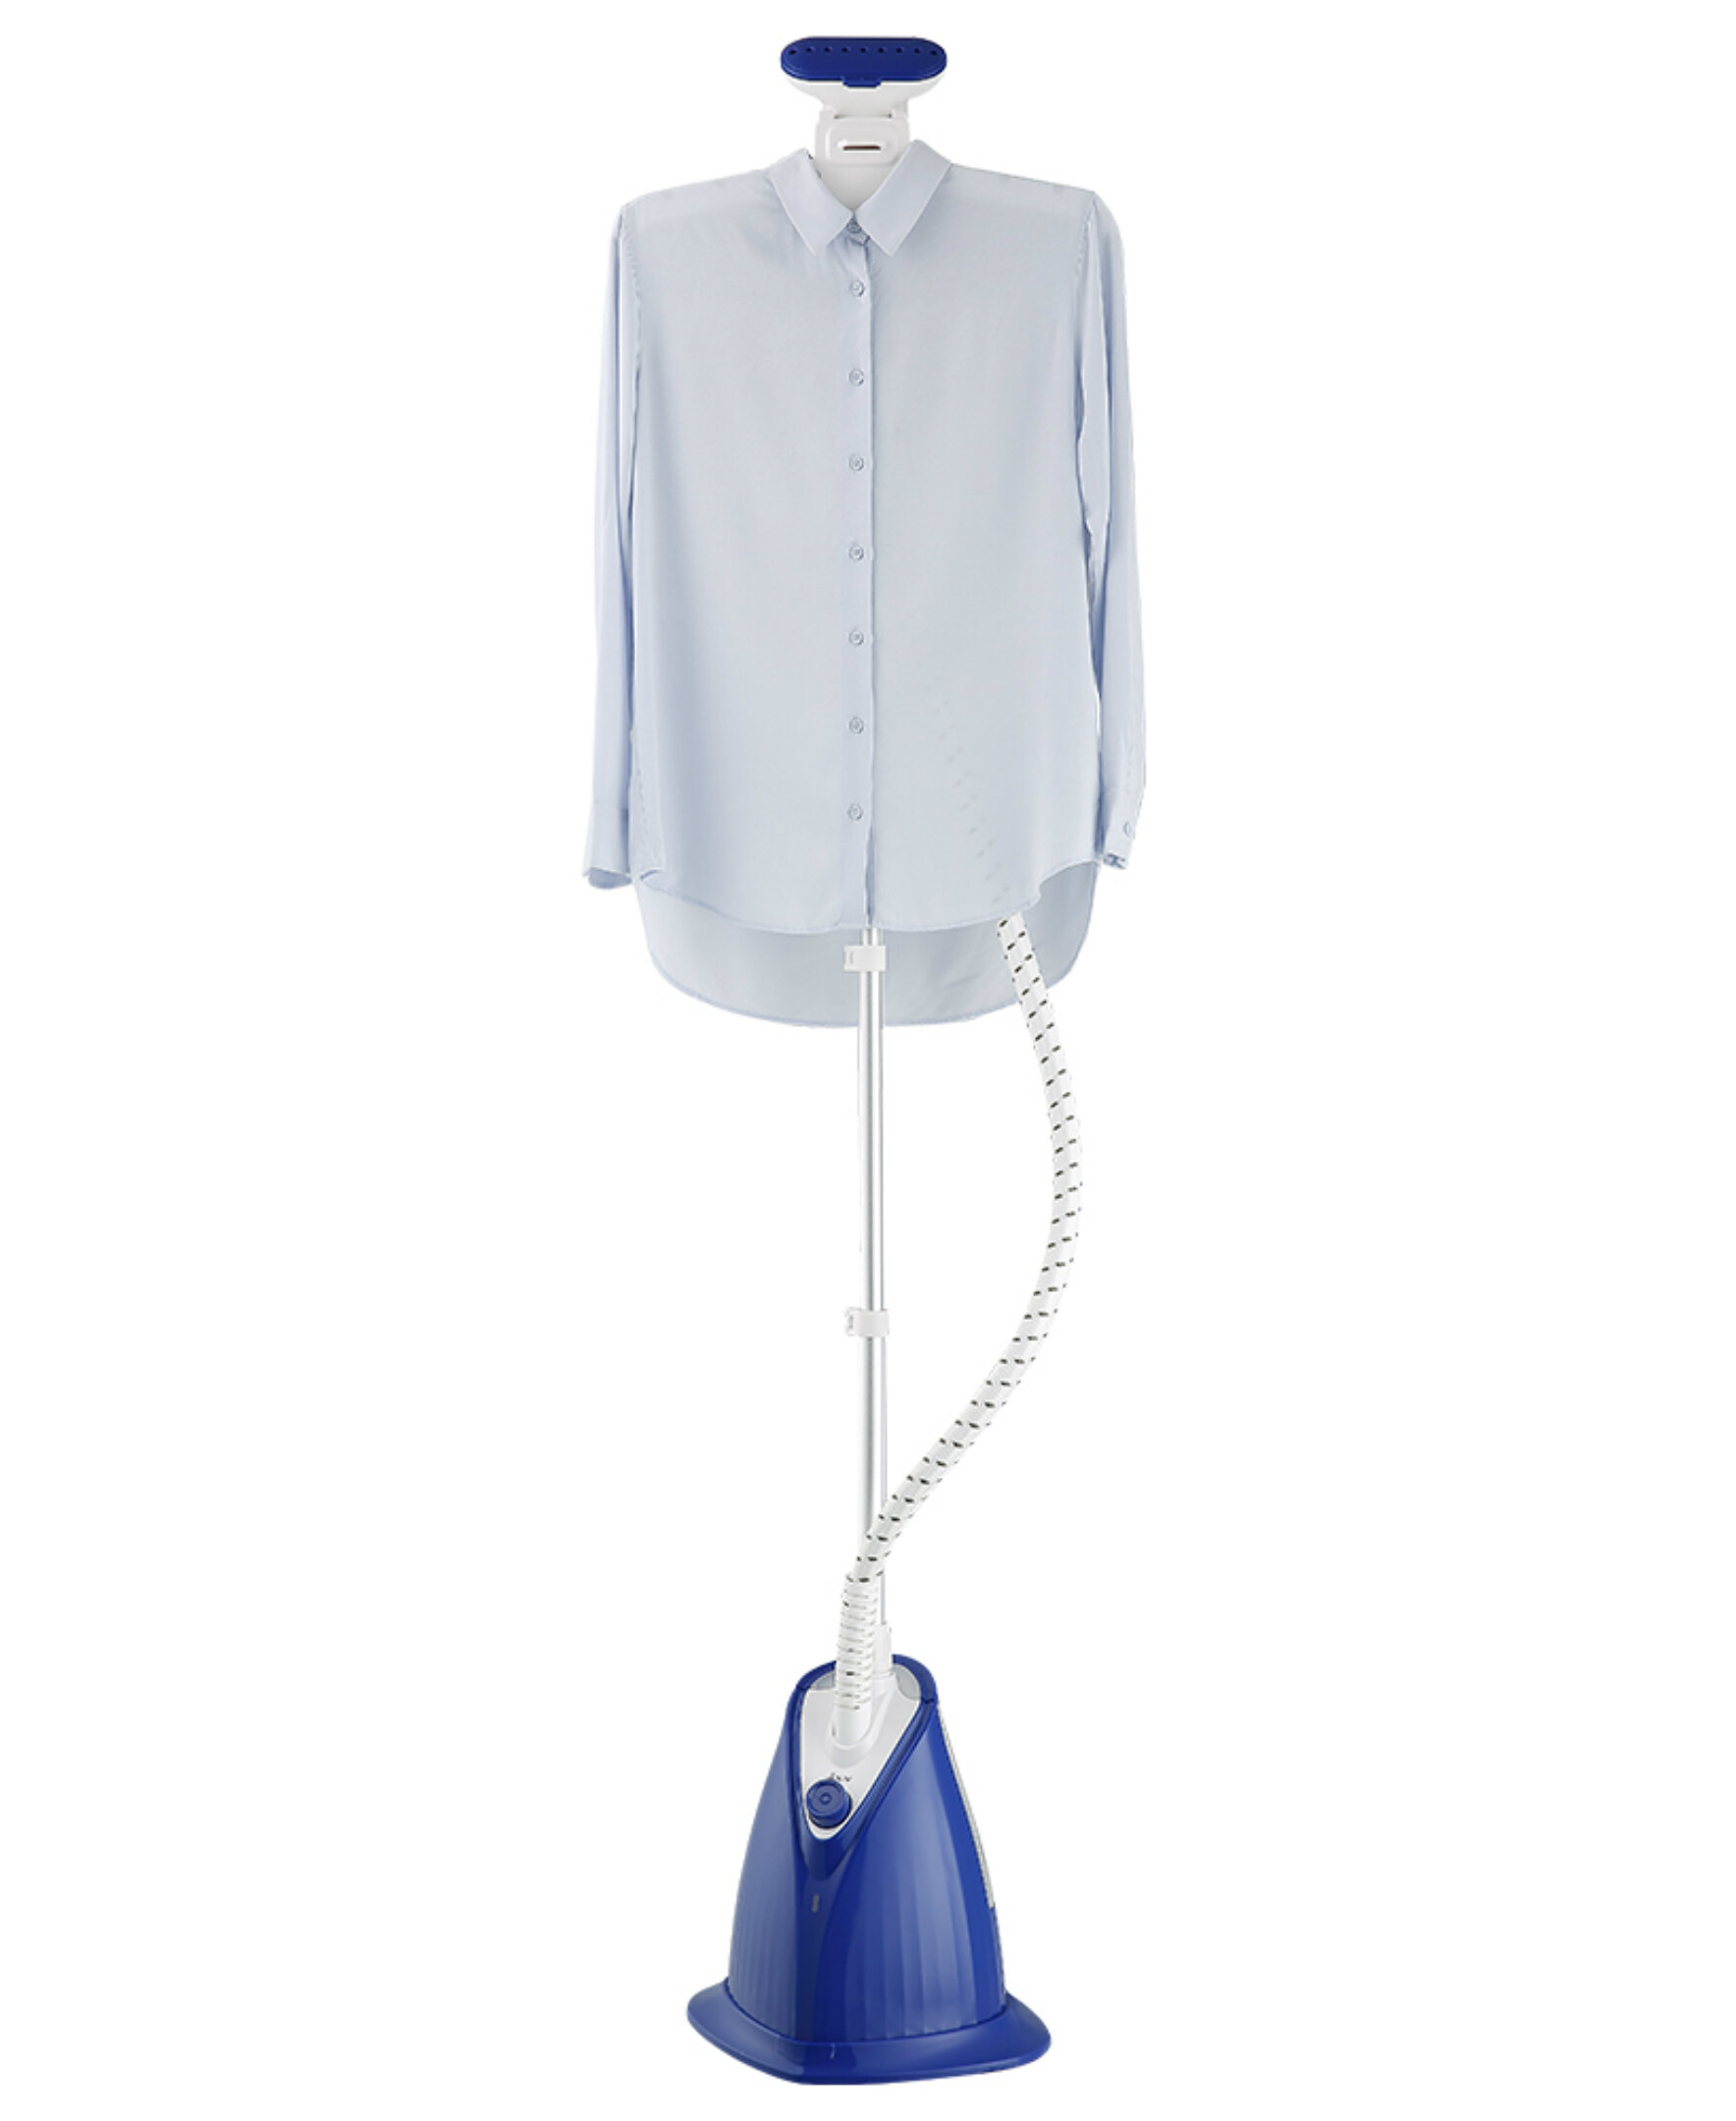 Blue Salav Performance Series 1500 Watt Garment Steamer with Adjustable Hanger 